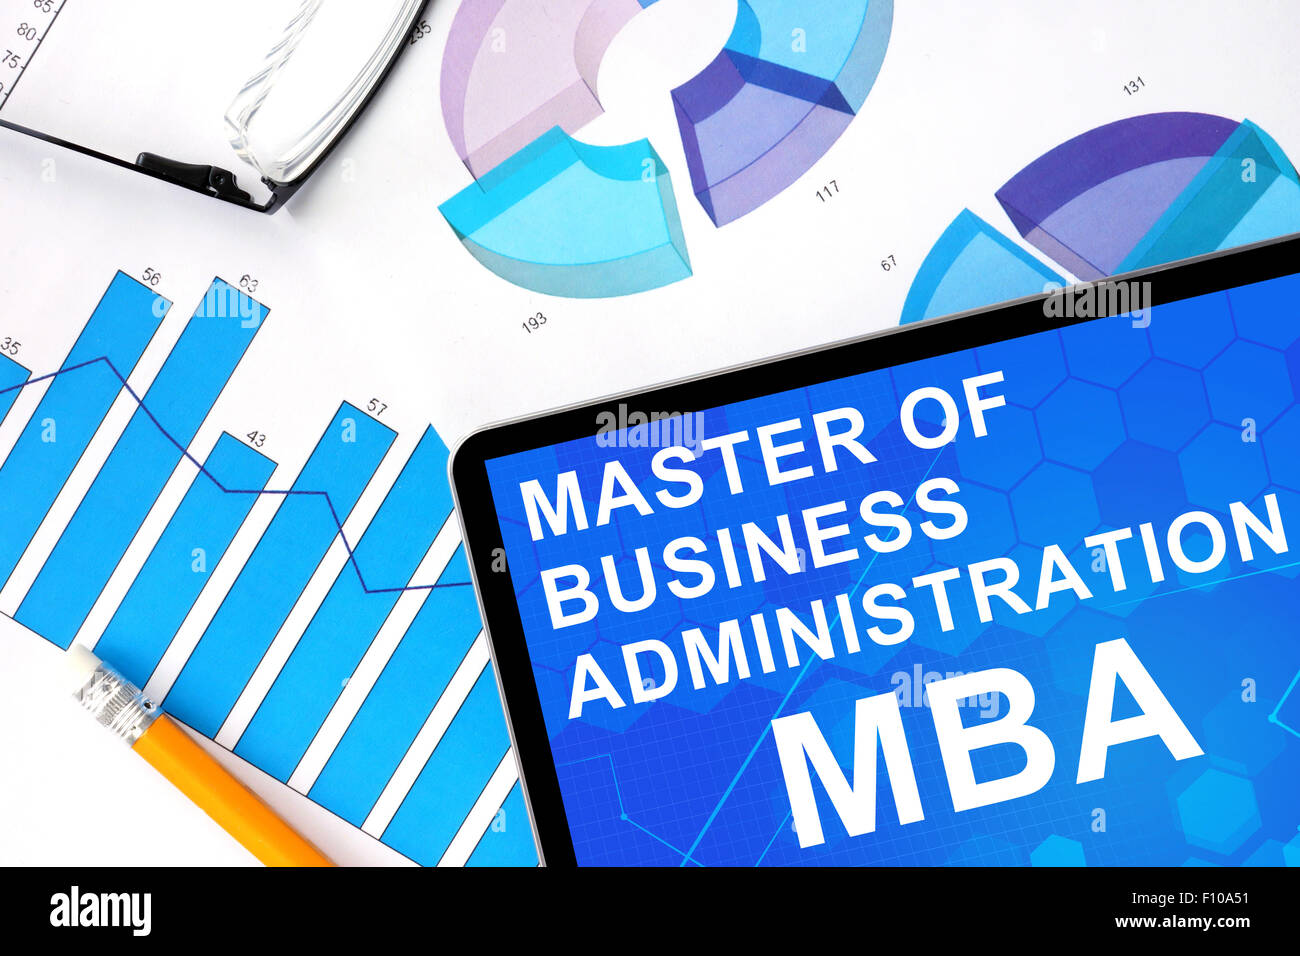 Tablette avec word MBA - Master of Business Administration et graphiques. Concept photo. Banque D'Images